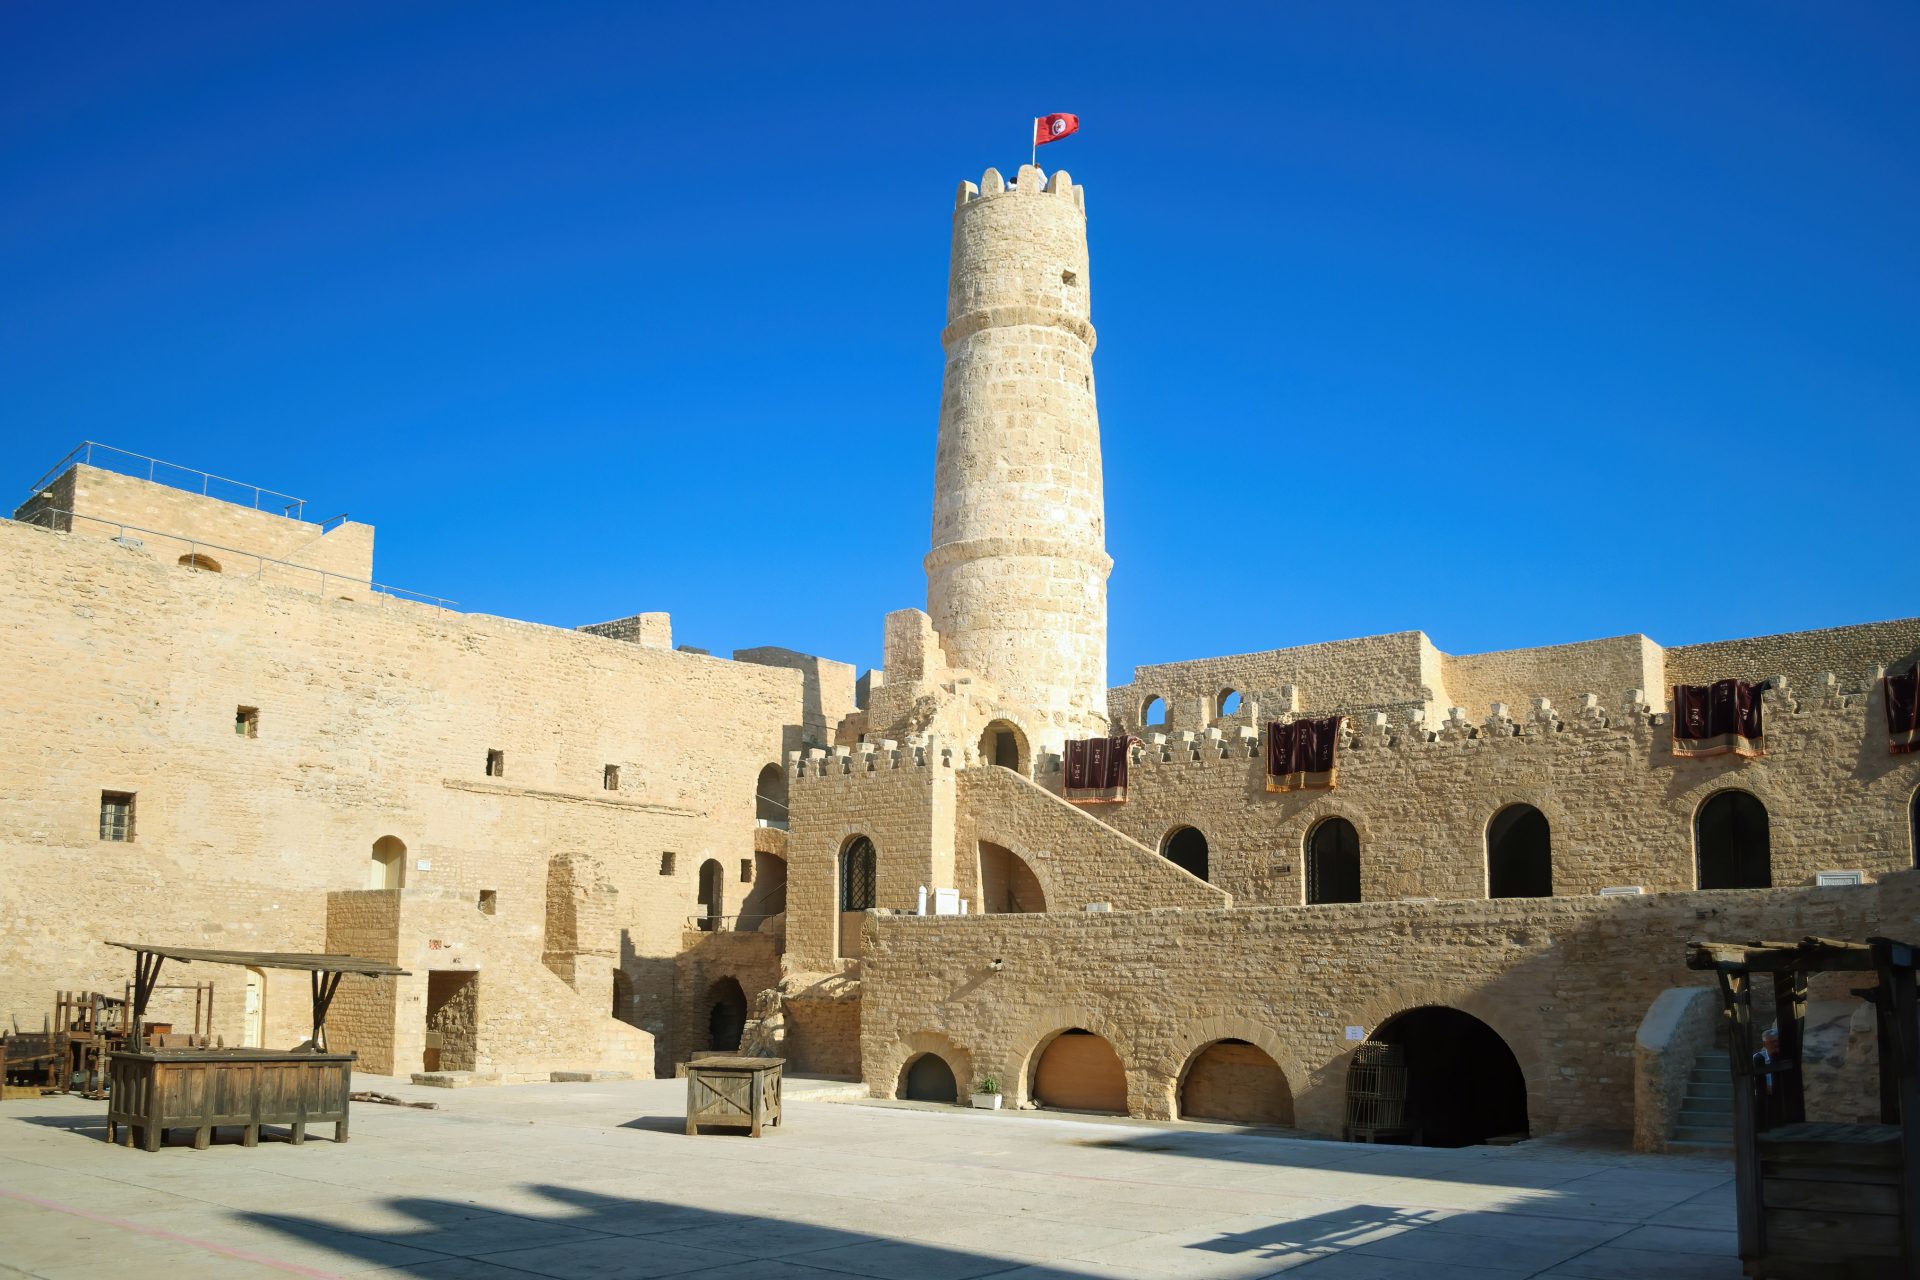 the main historical attraction of monastir is the fortress ribat hartem, monastir.